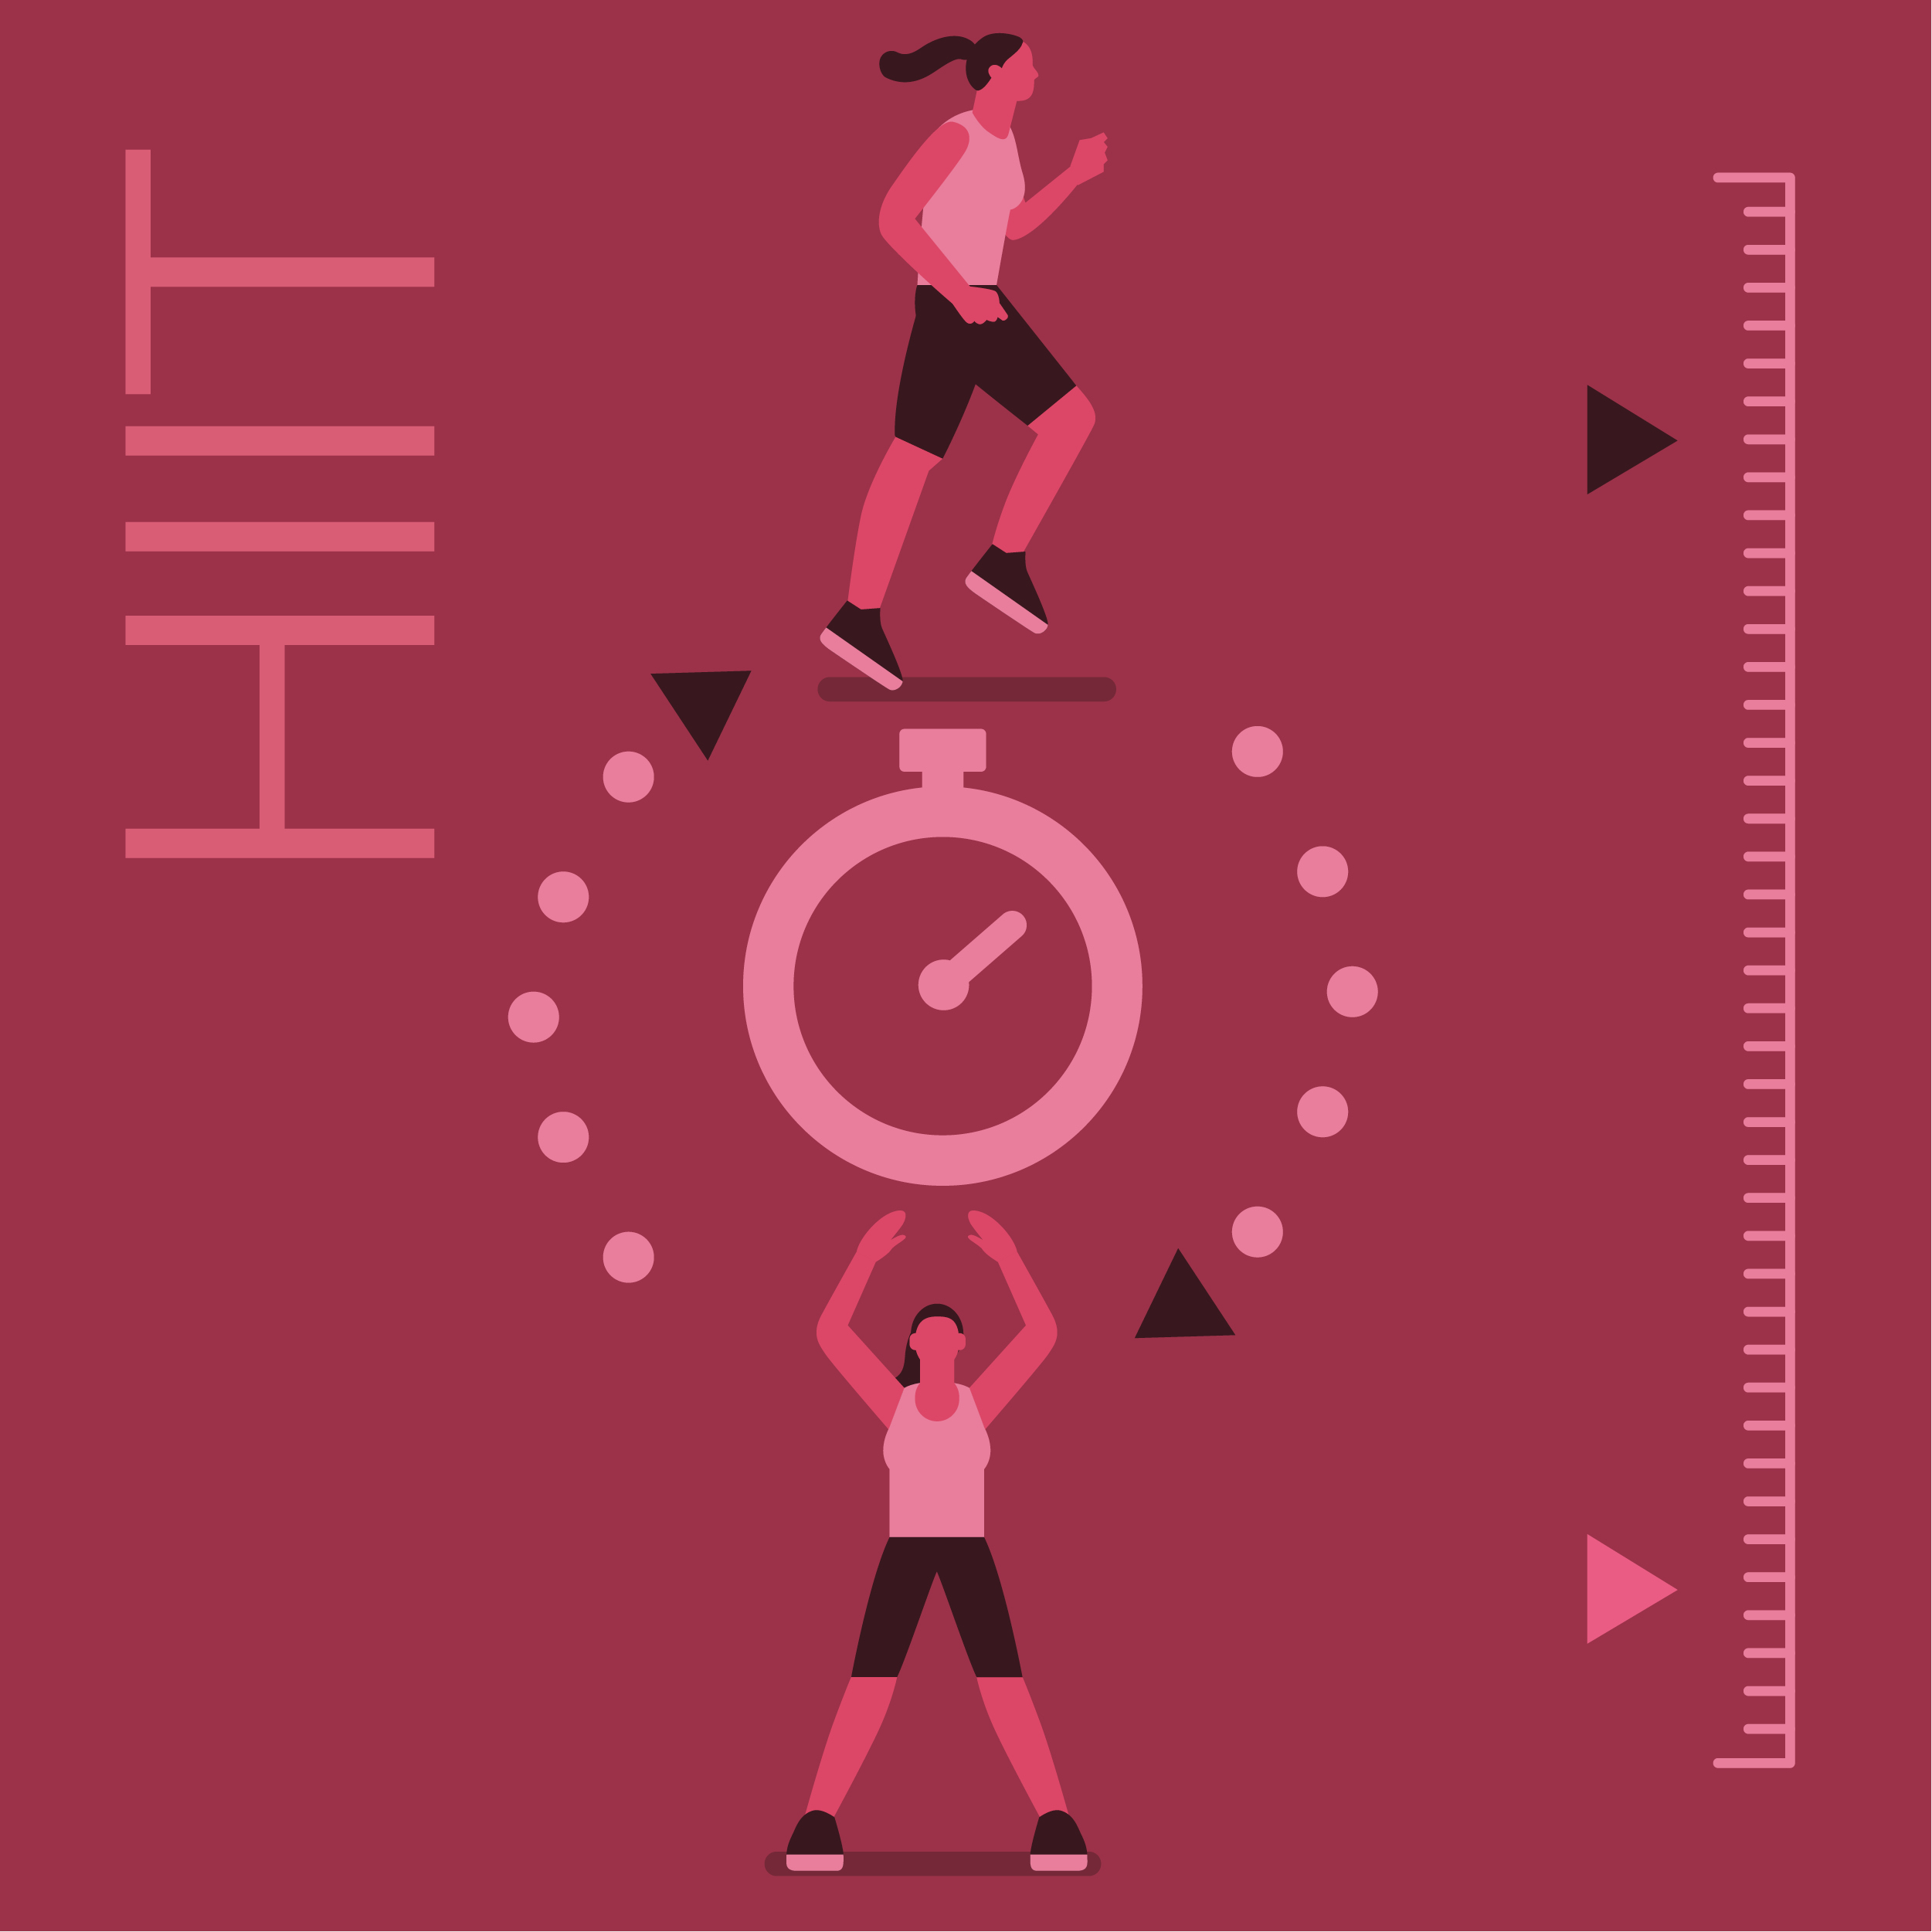 Experience Life's December fitness program illustration: HIIT